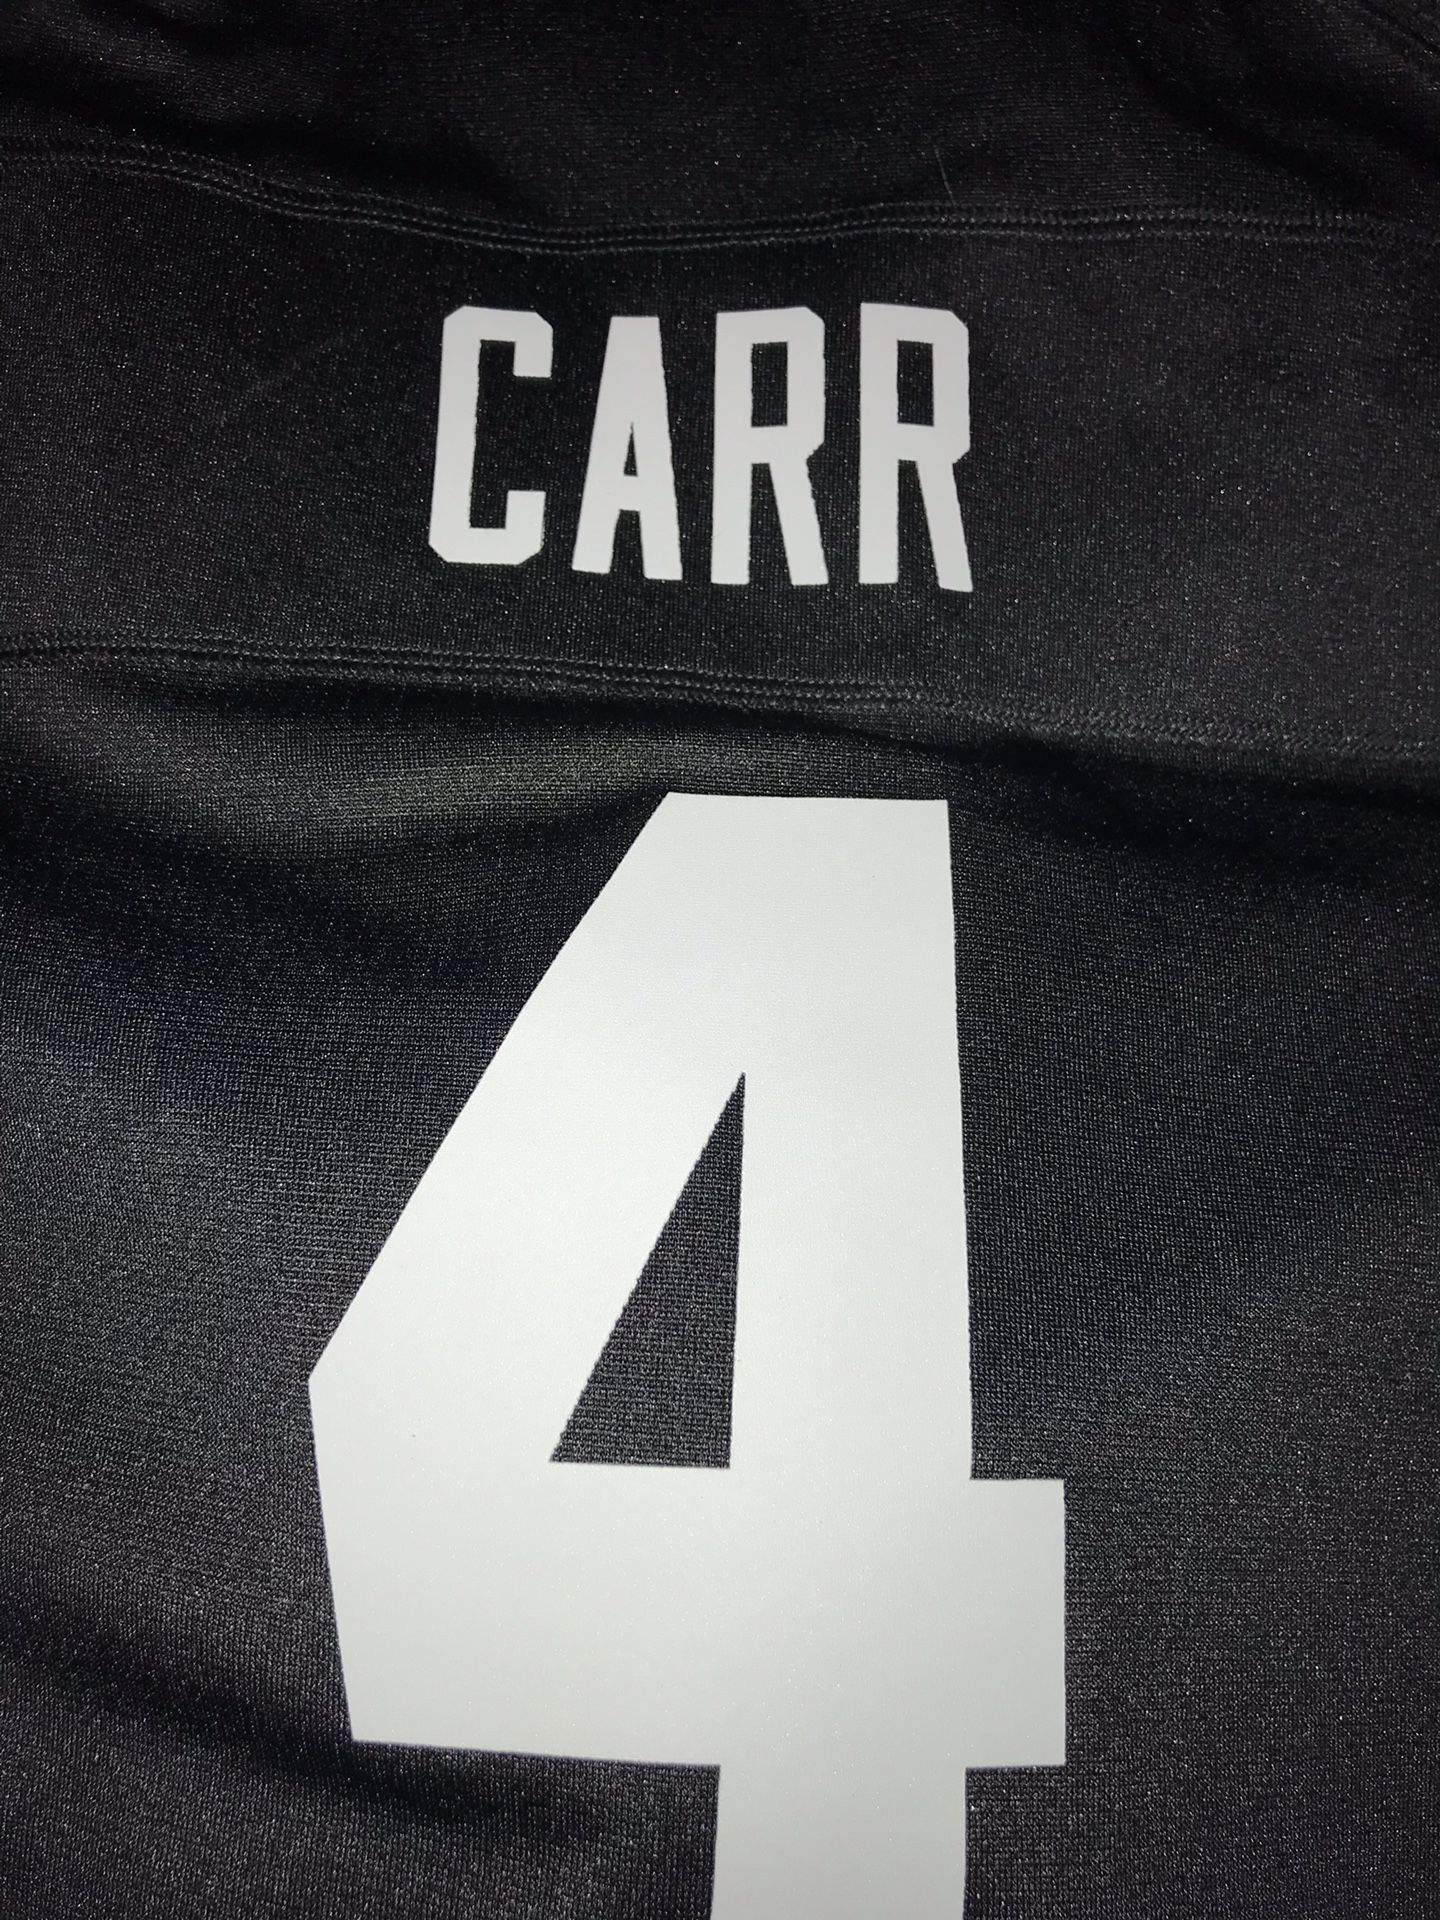 Raiders David Carr jersey